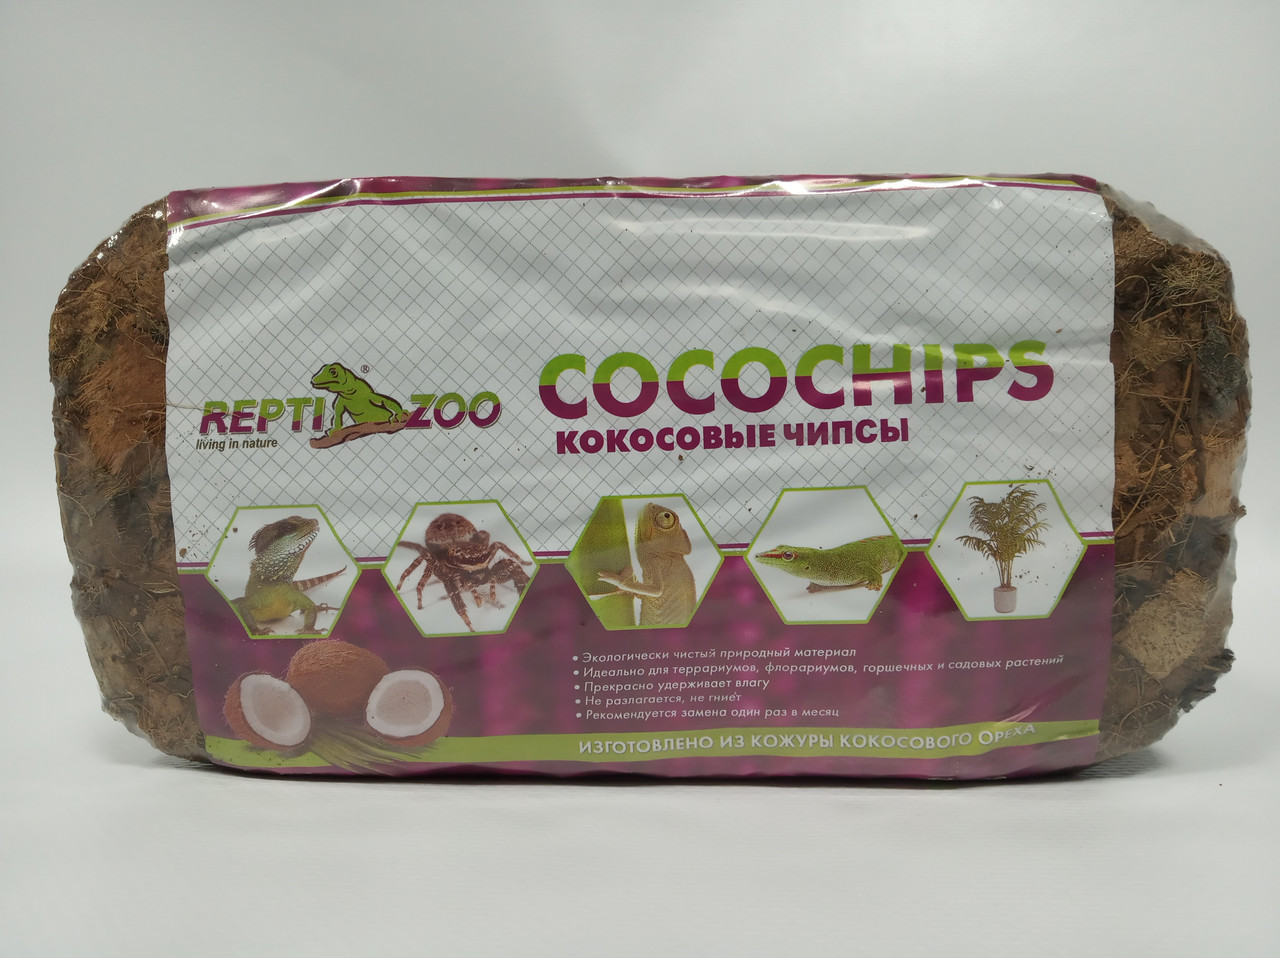 Кокосовые чипсы COCOCHIPS REPTIZOO